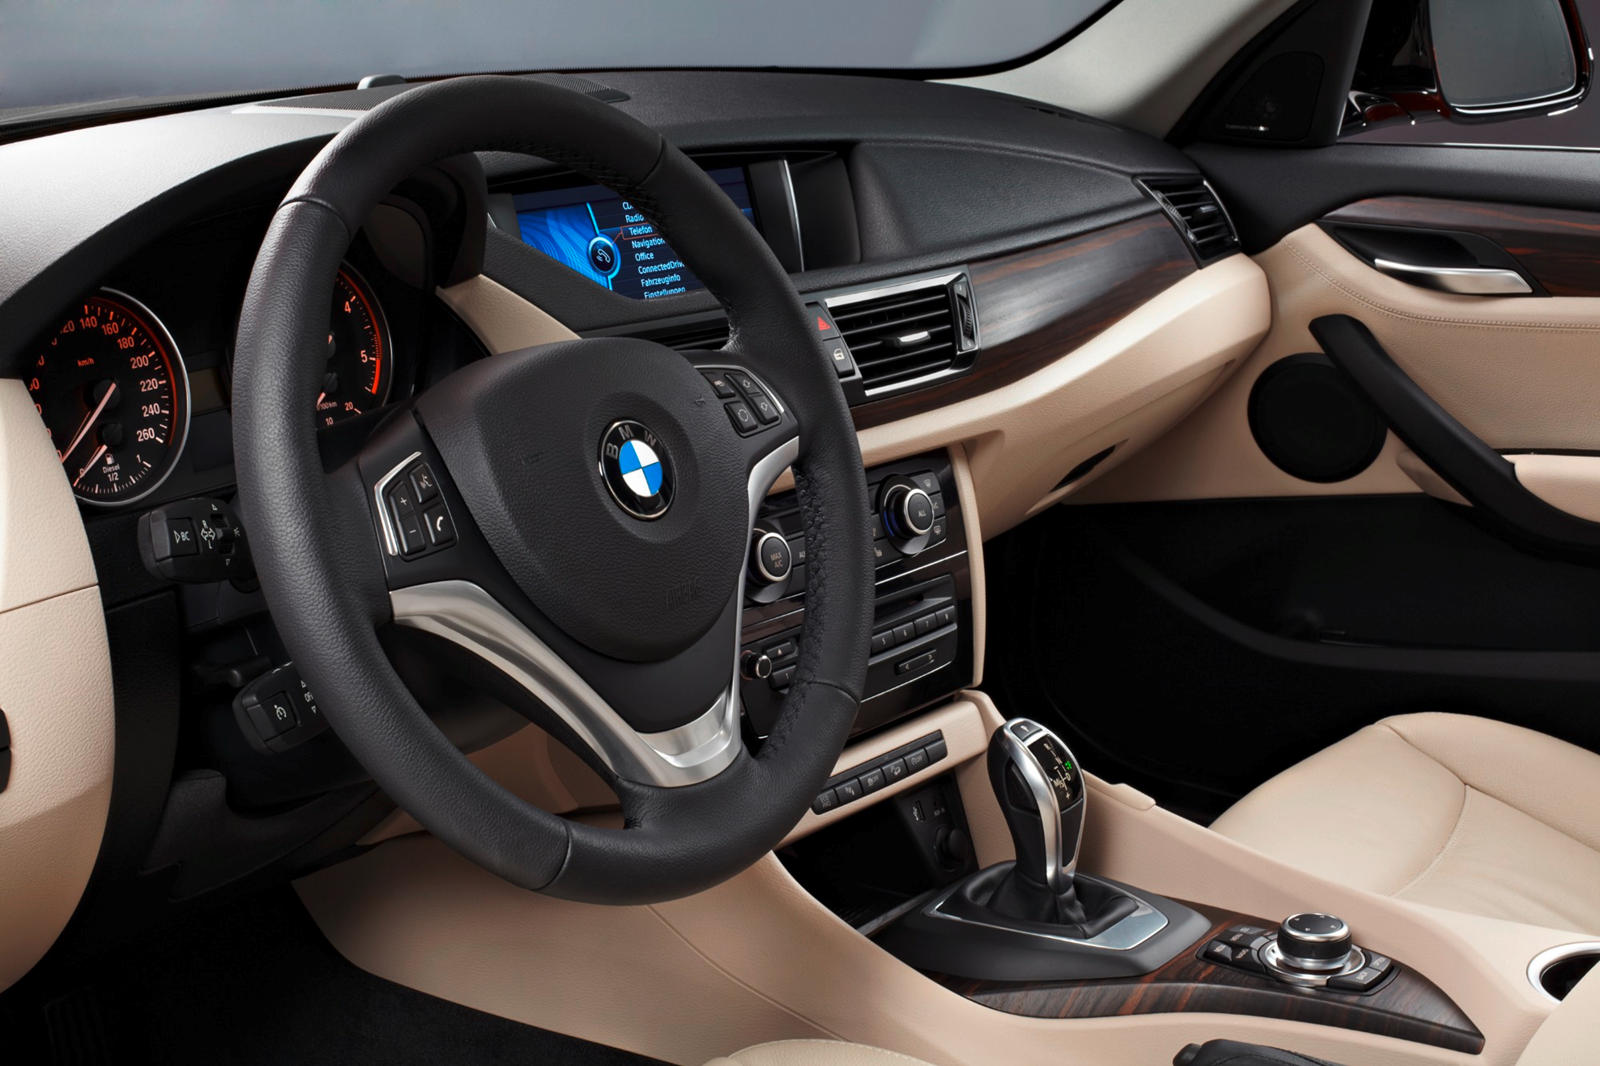 2014 BMW X1 Interior Pictures